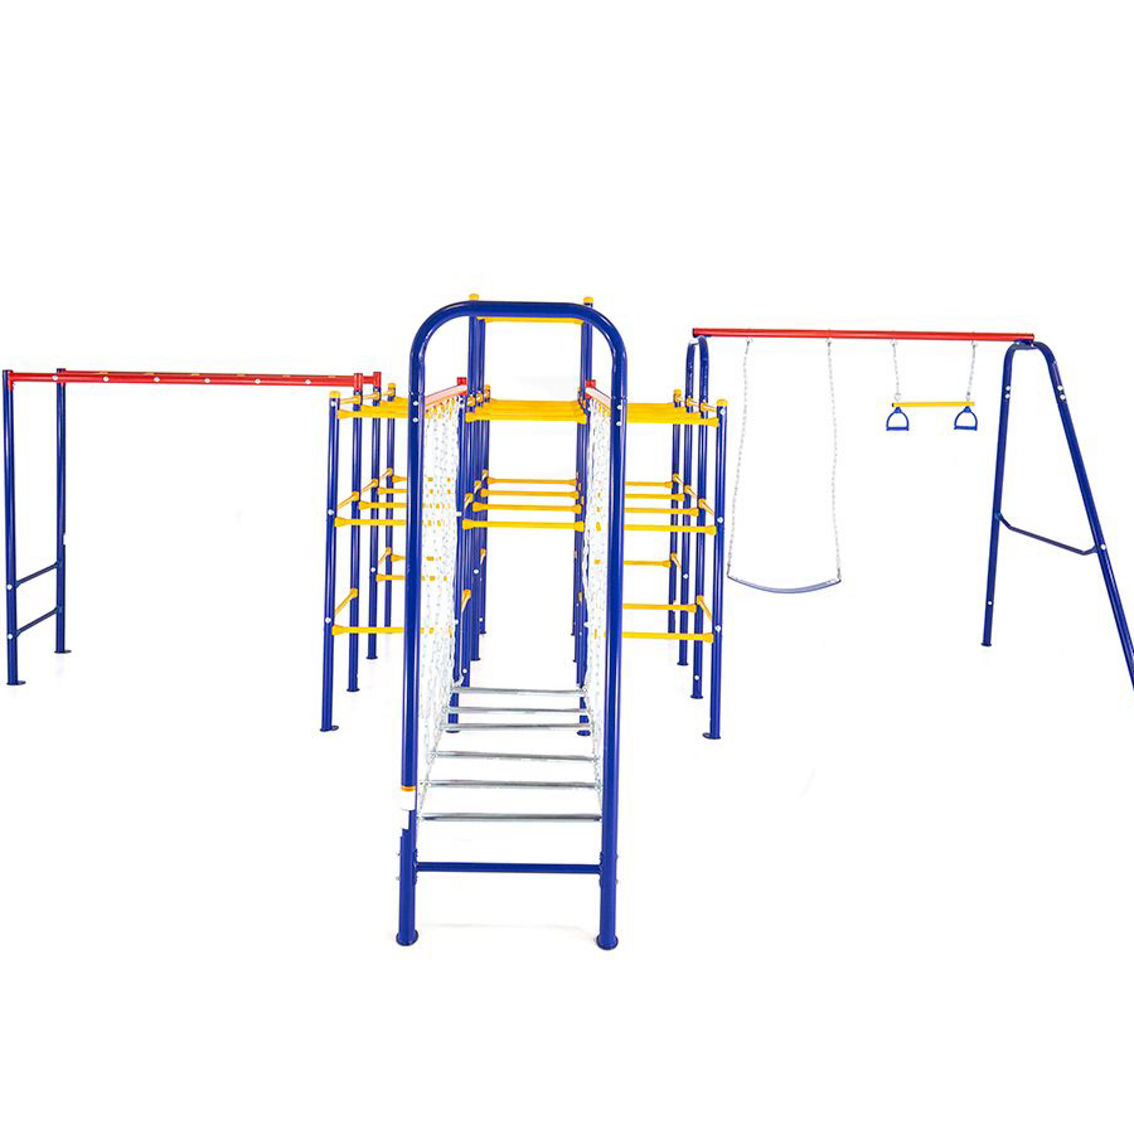 ActivPlay Modular Jungle Gym with Swing Set, Monkey Bar and Hanging Bridge